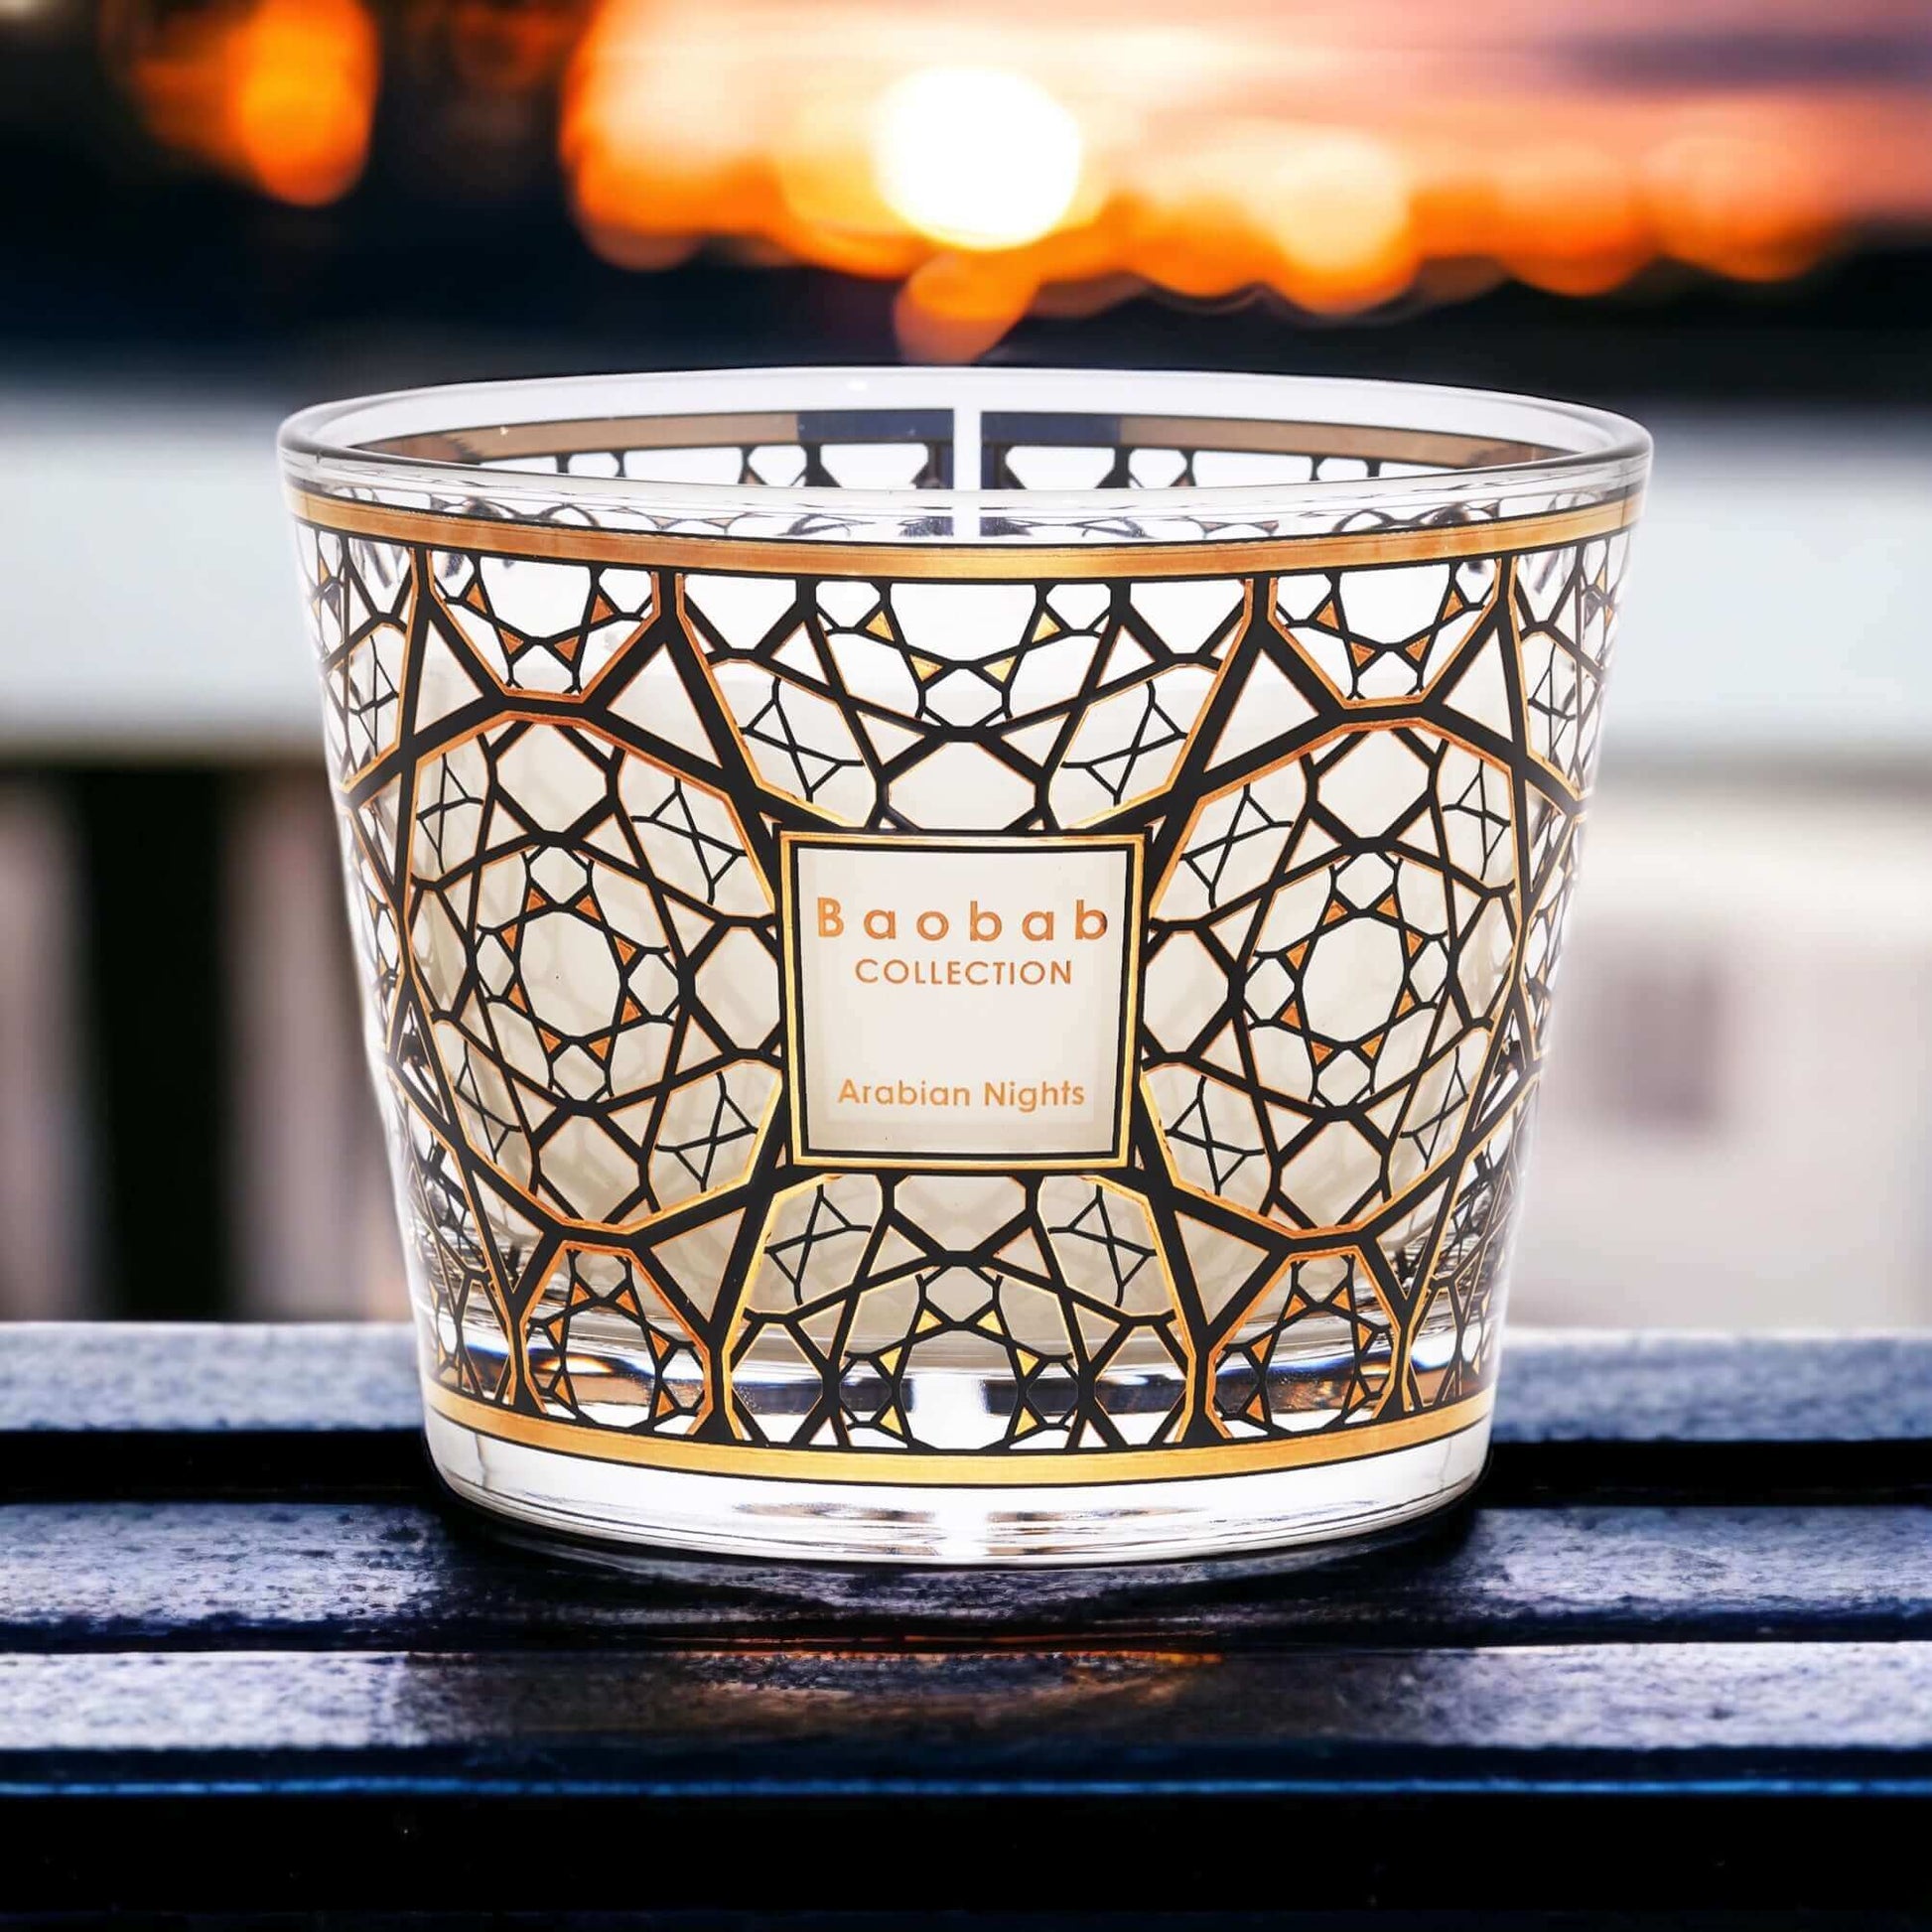 Arabian Nights – Baobab Collection